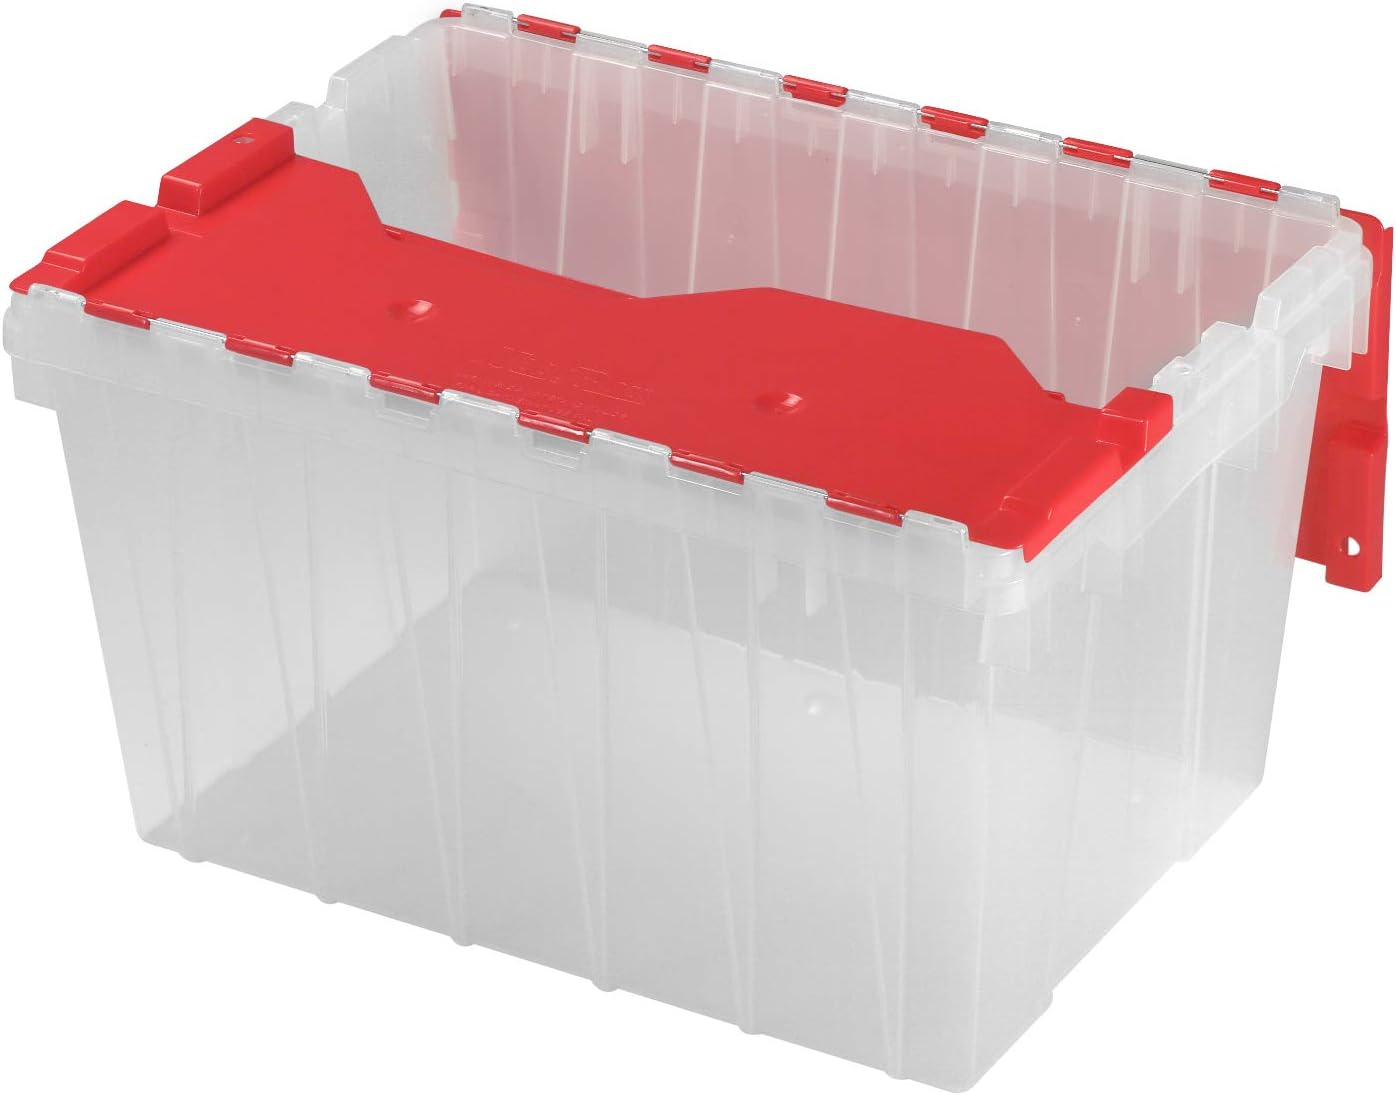 Tribello Clear Plastic Storage Bins with Lids Stackable Storage Bins (15  Quart)